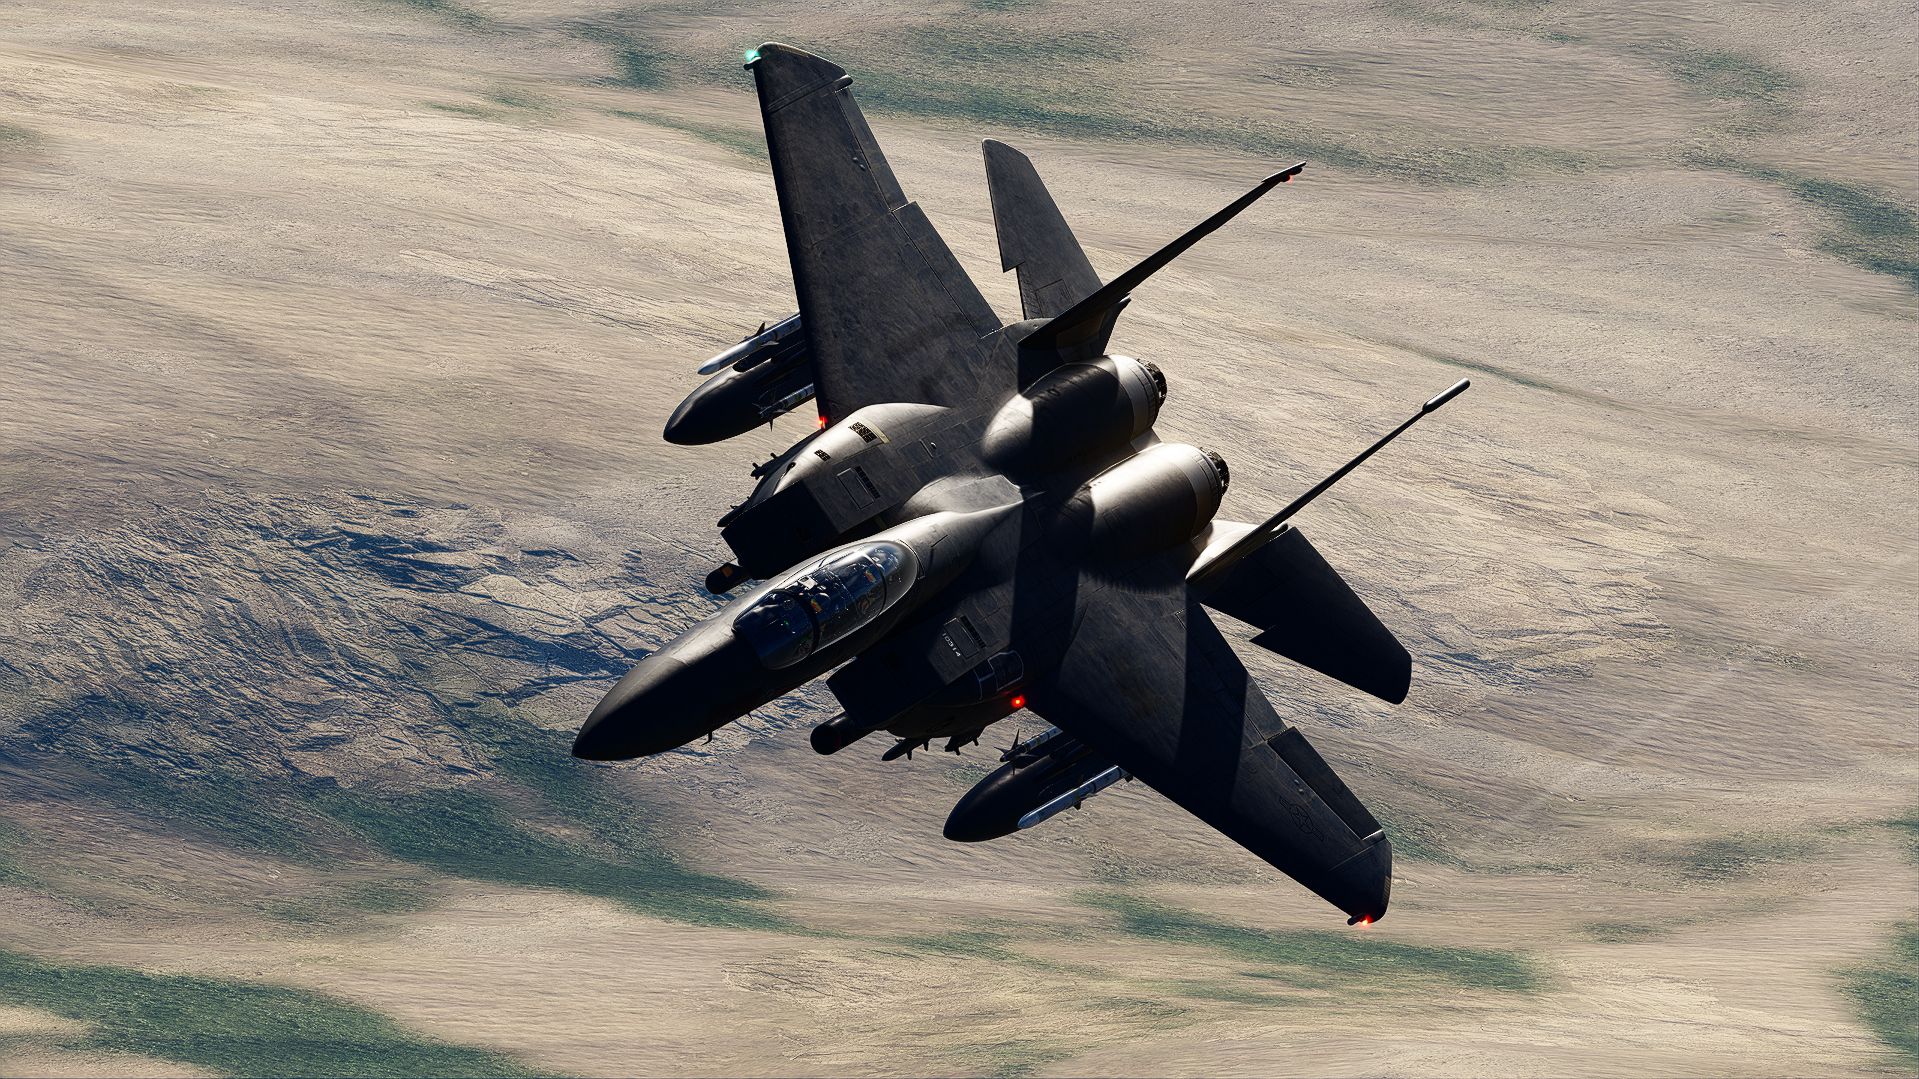 F-15E Strike eagle LN 91-314 "Chief 2021" REWORKED